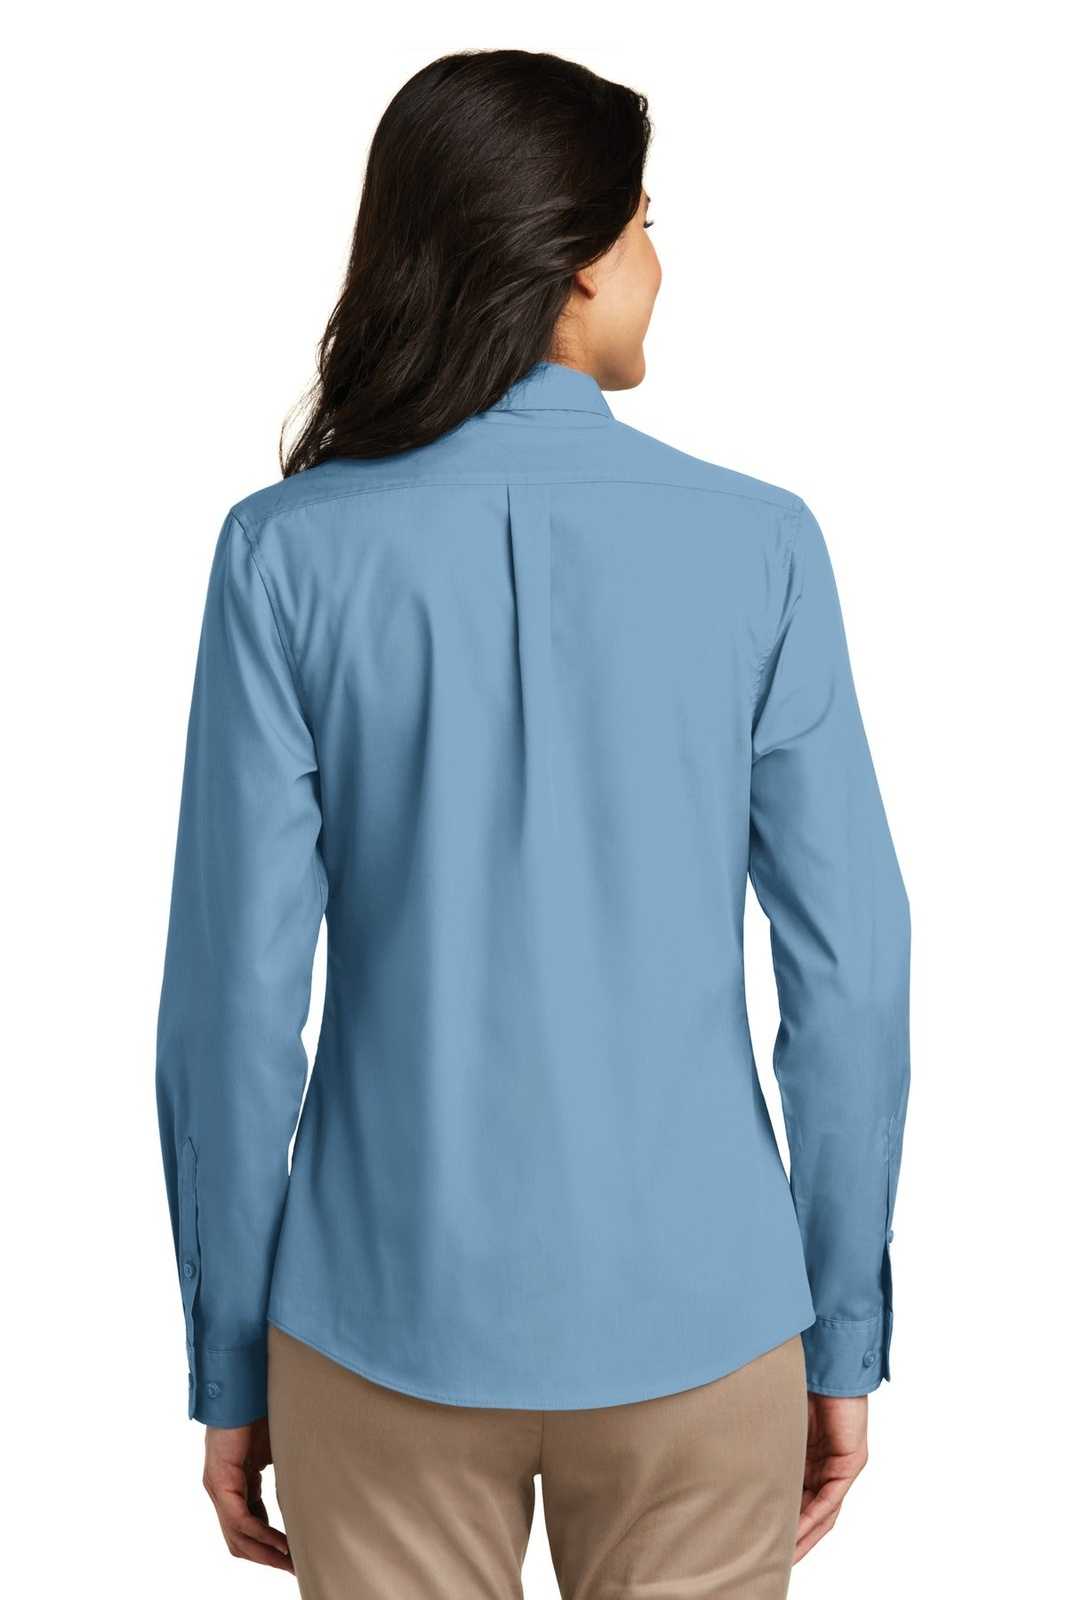 Port Authority LW100 Ladies Long Sleeve Carefree Poplin Shirt - Carolina Blue - HIT a Double - 2